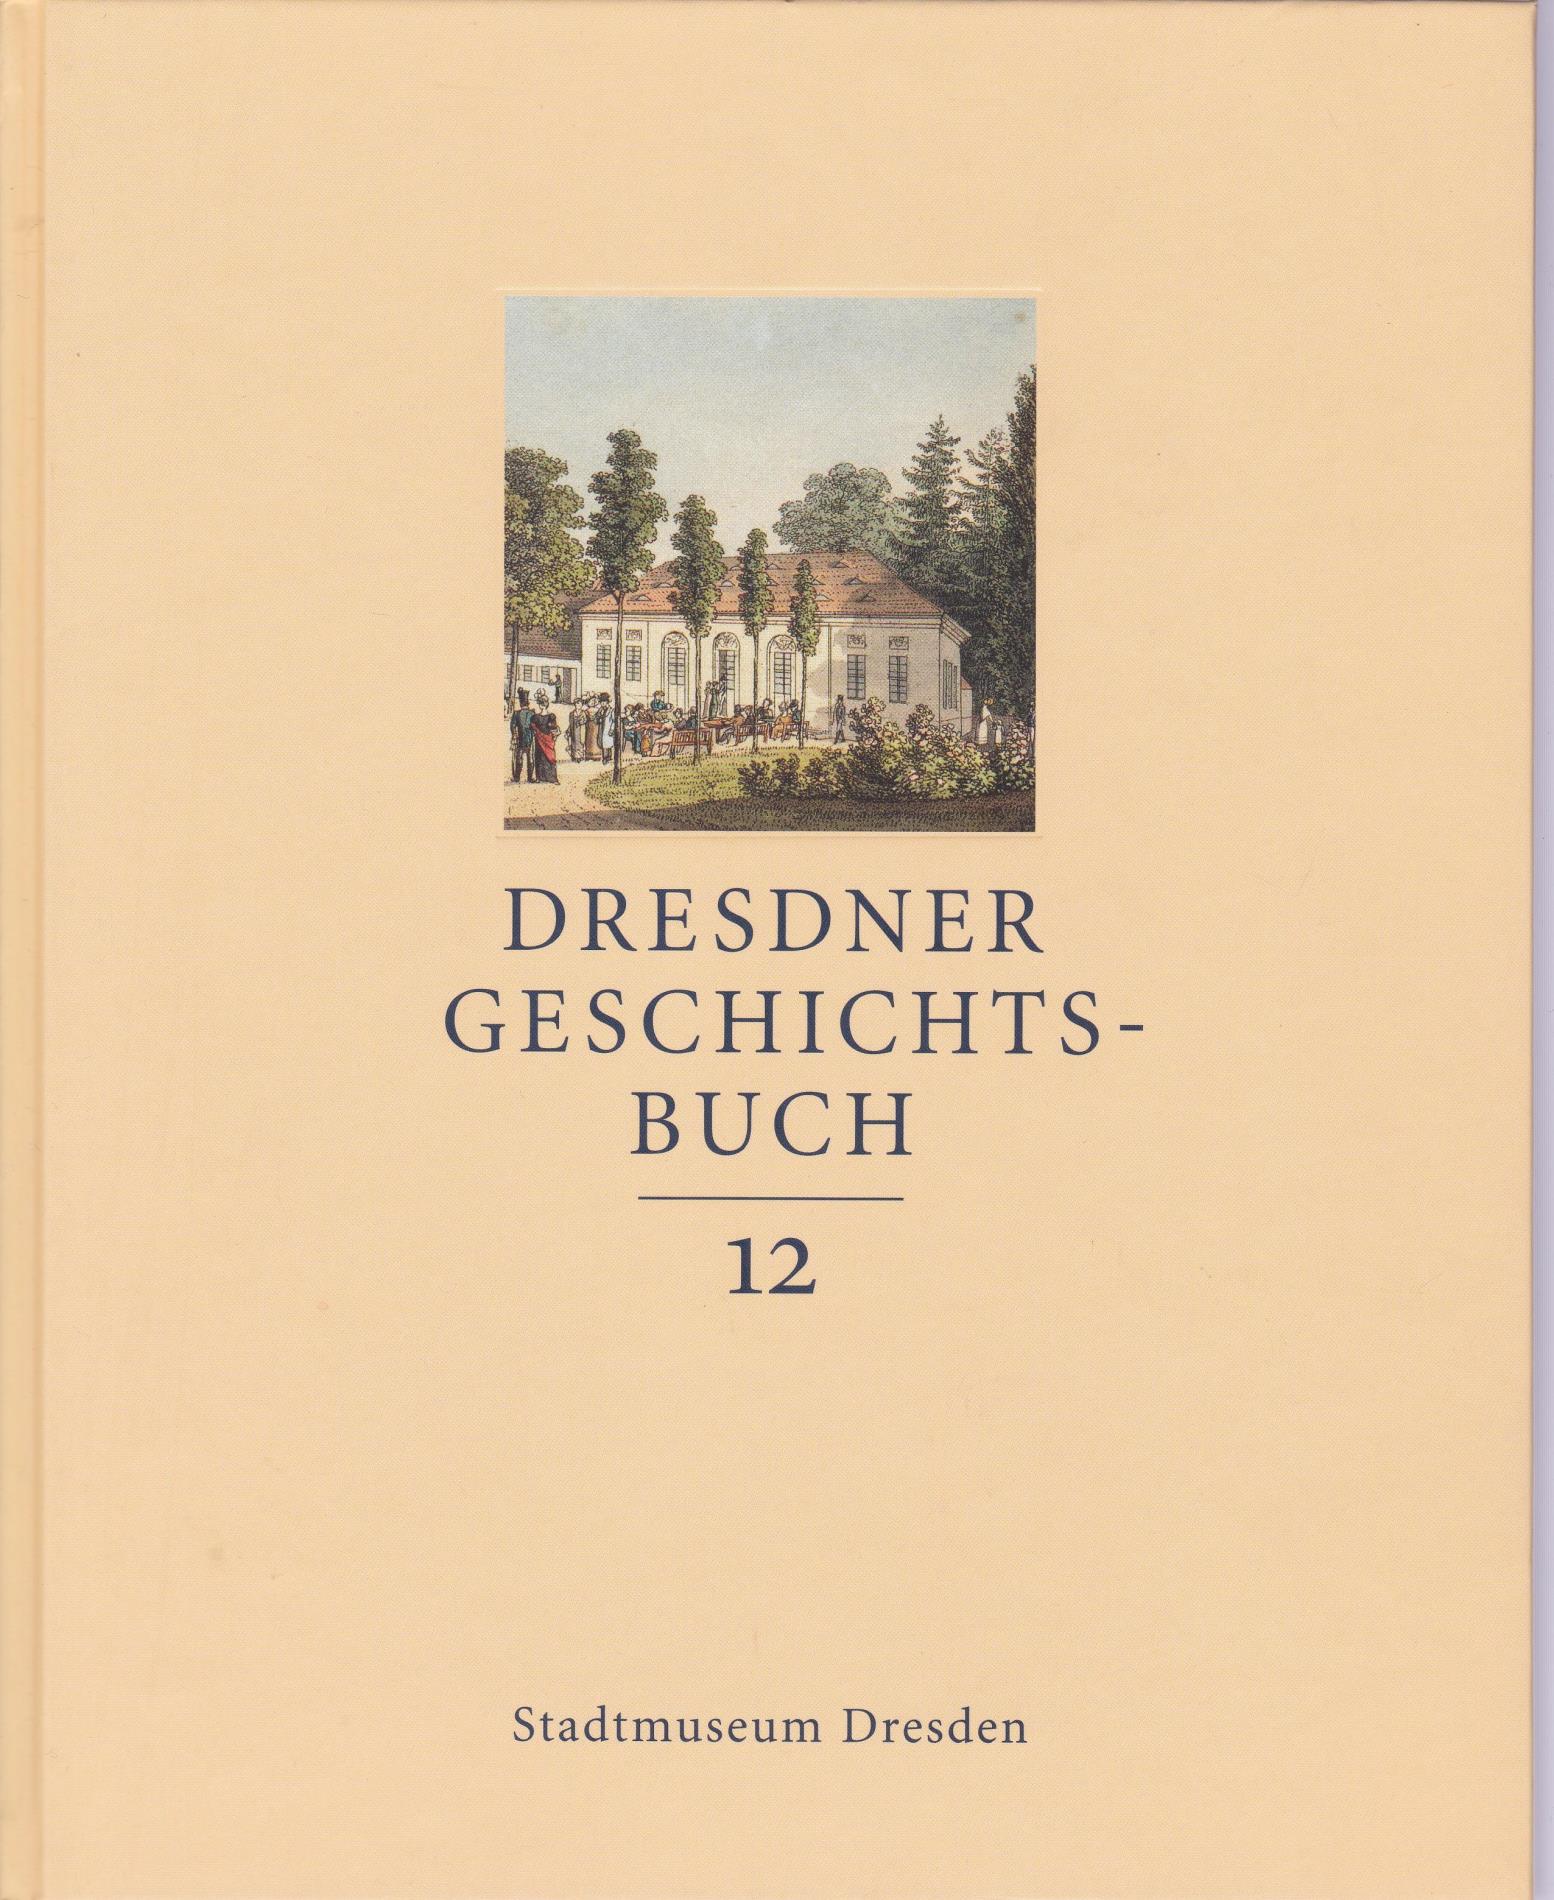 Dresdner Geschichtsbuch. HIER: Band 12, - Reichert, Friedrich; Bechter, Barbara; Eichner, Rudolf; Lienert, Marina u. a.